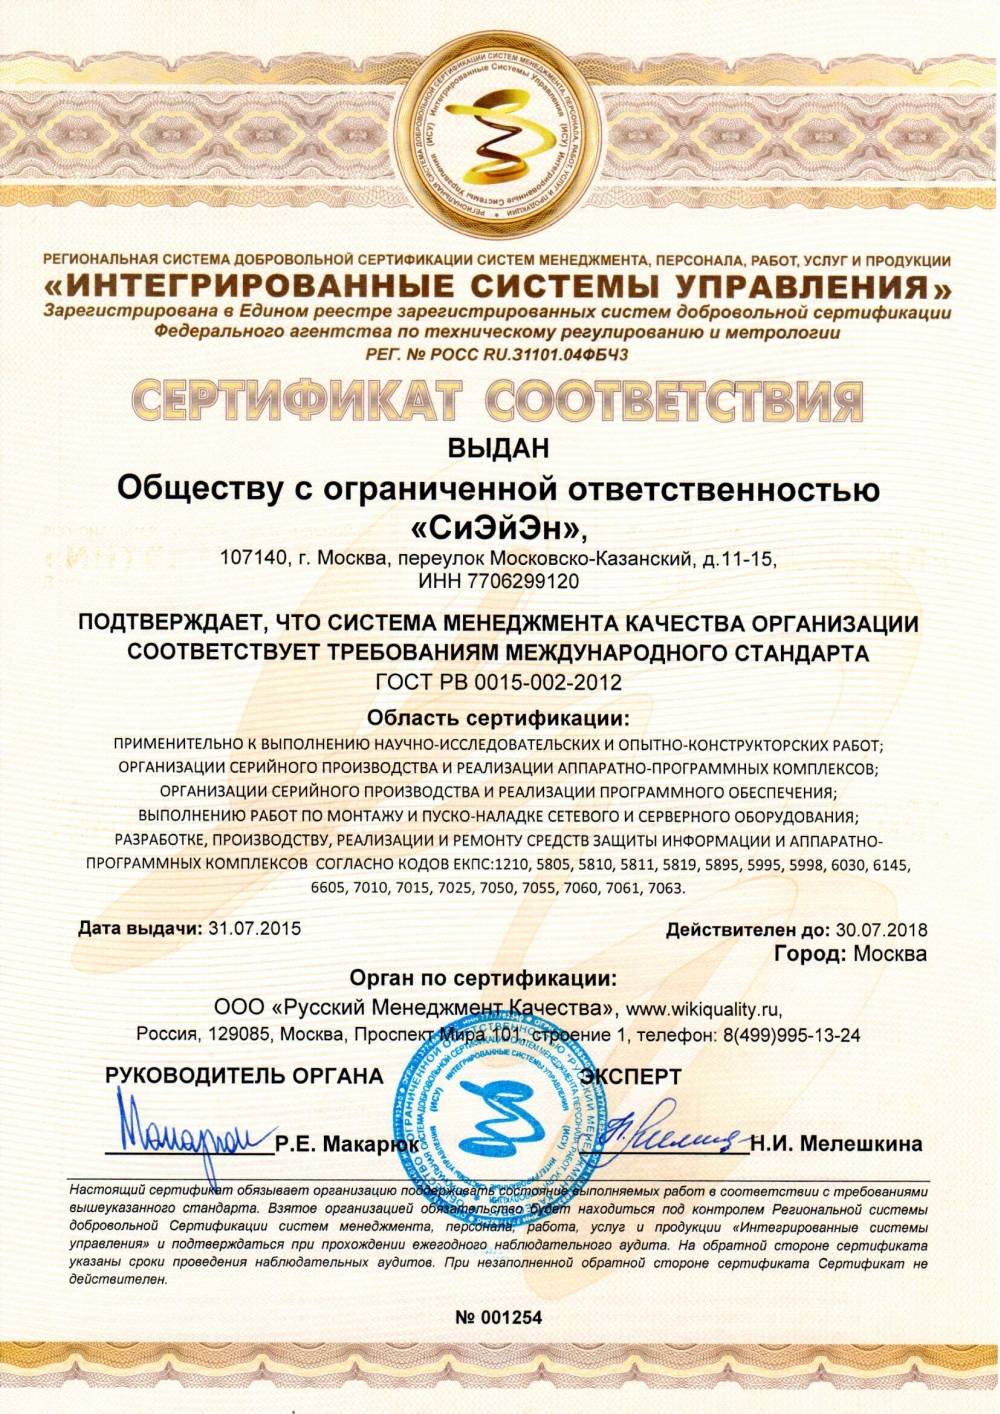 Сертификат гост рв 0015-002-2012